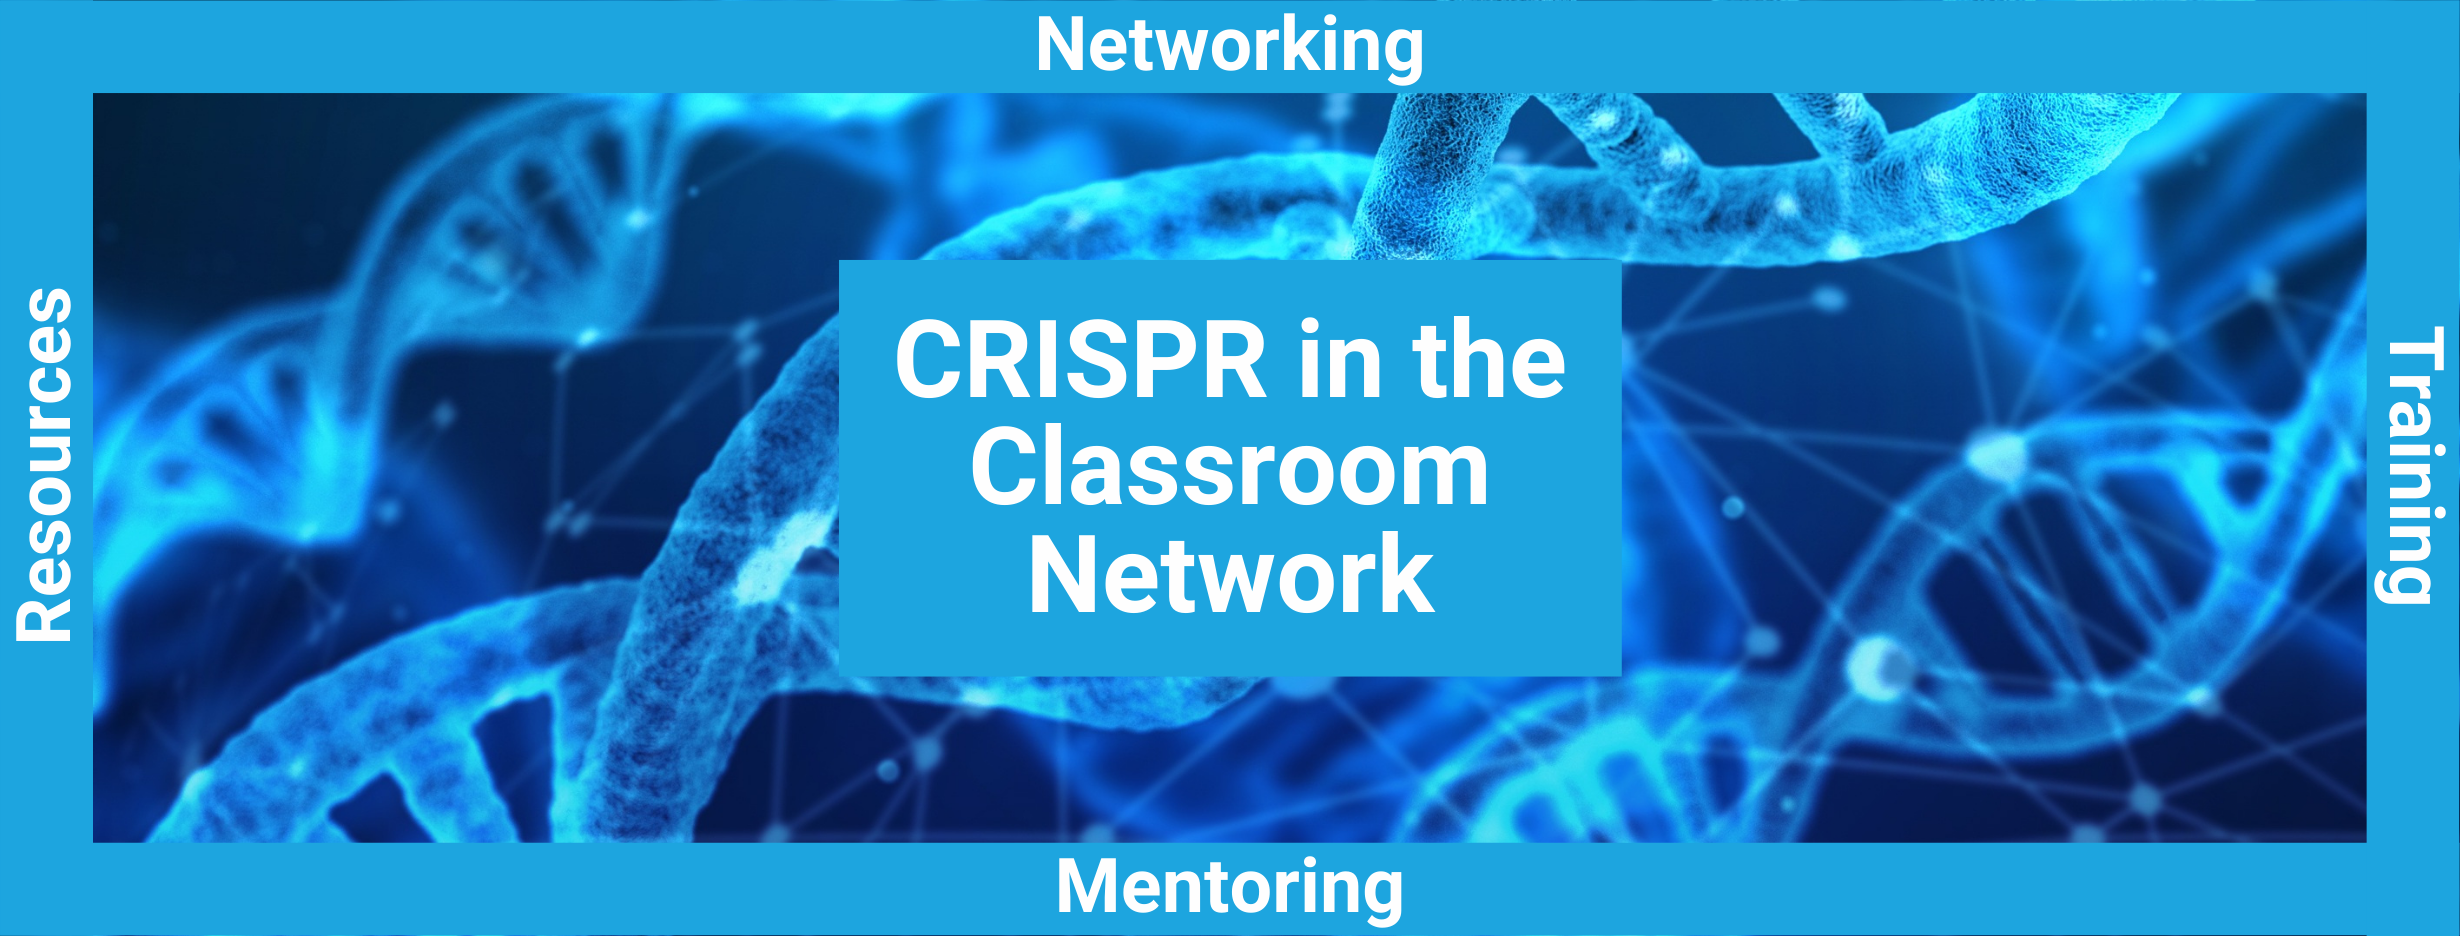 CRISPR In the Classroom Network Banner